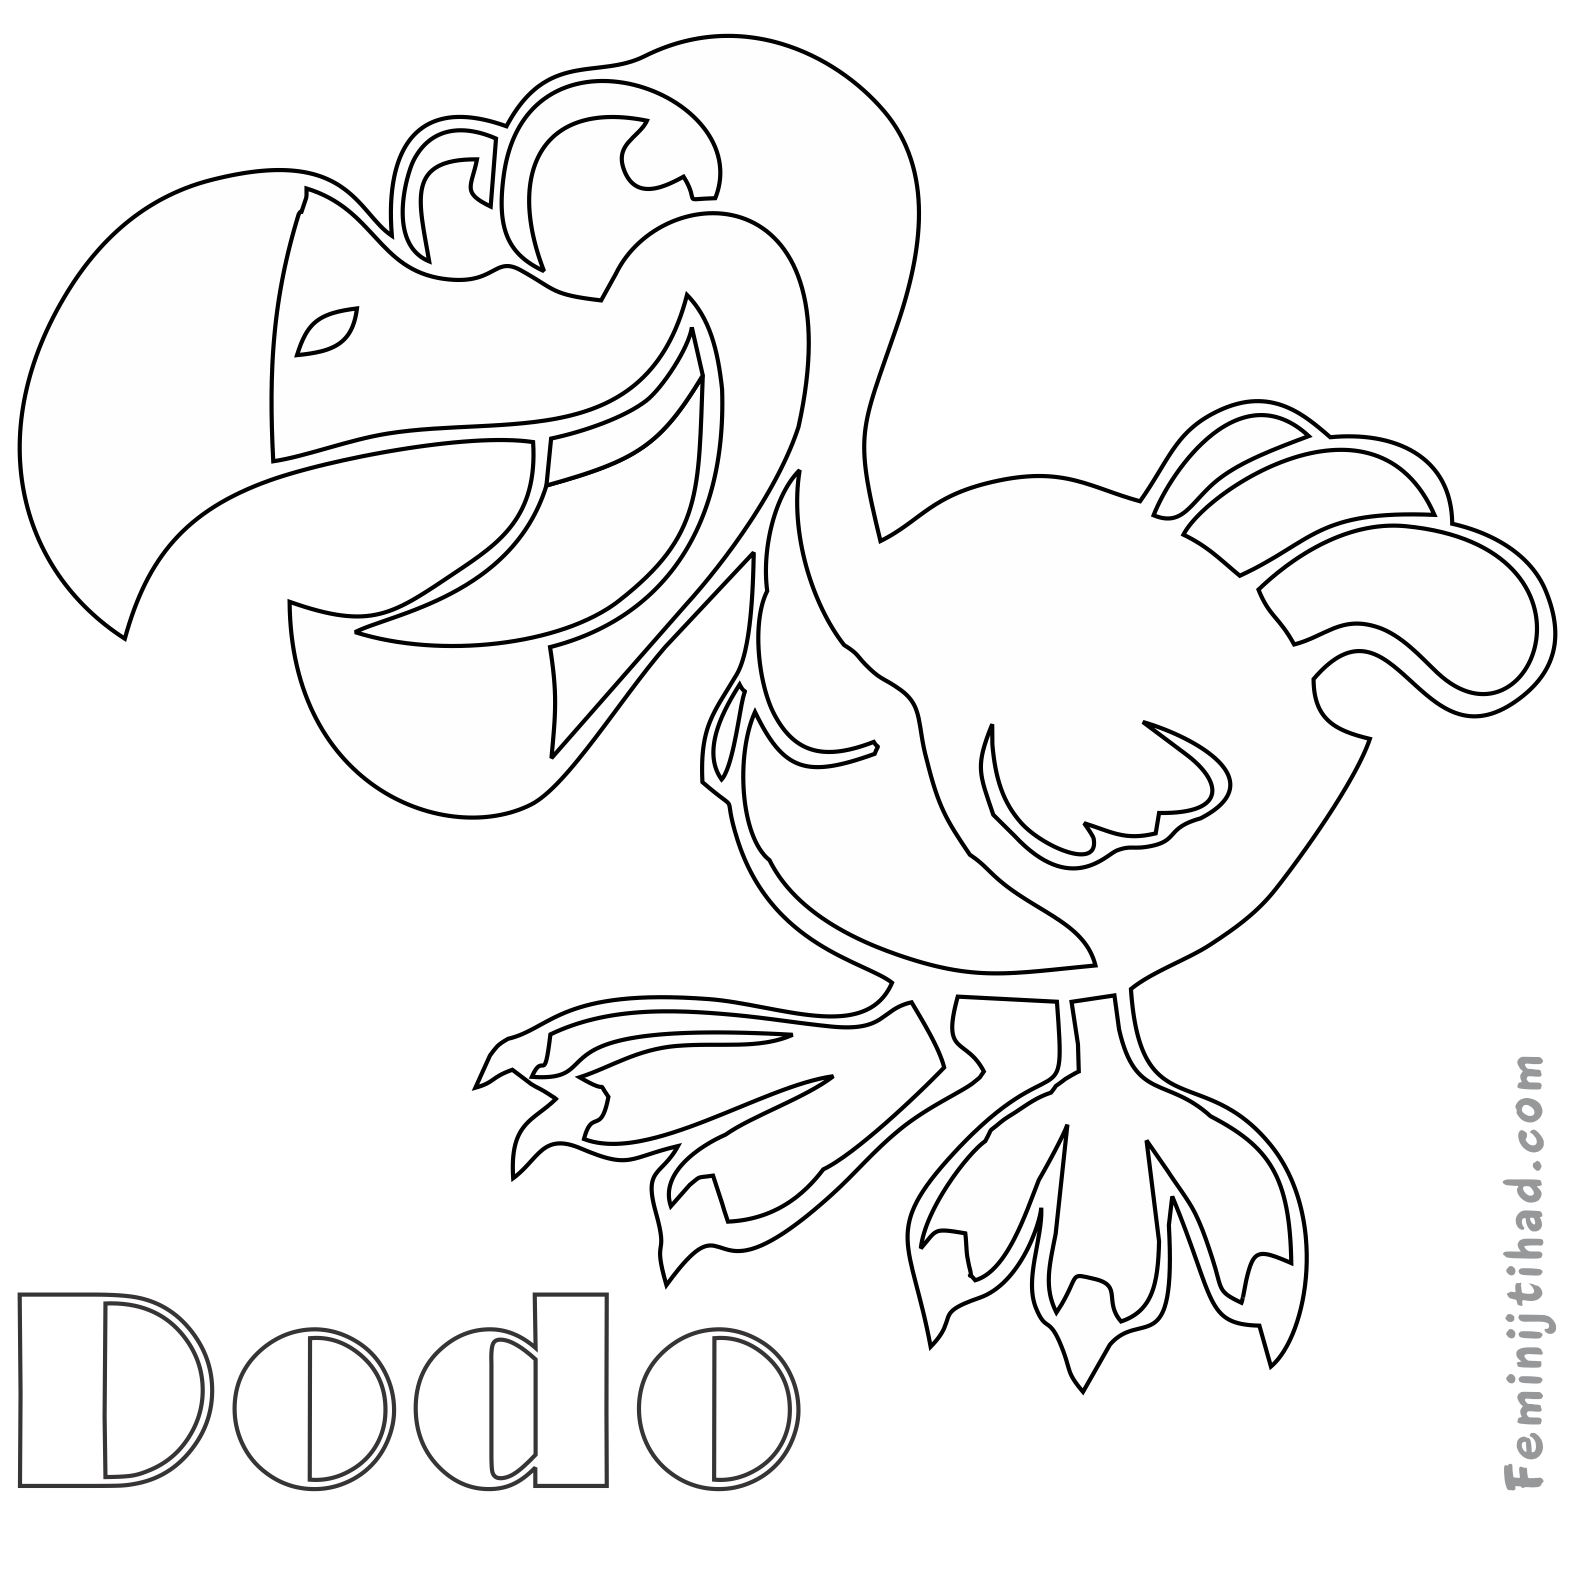 dodo bird coloring page to print